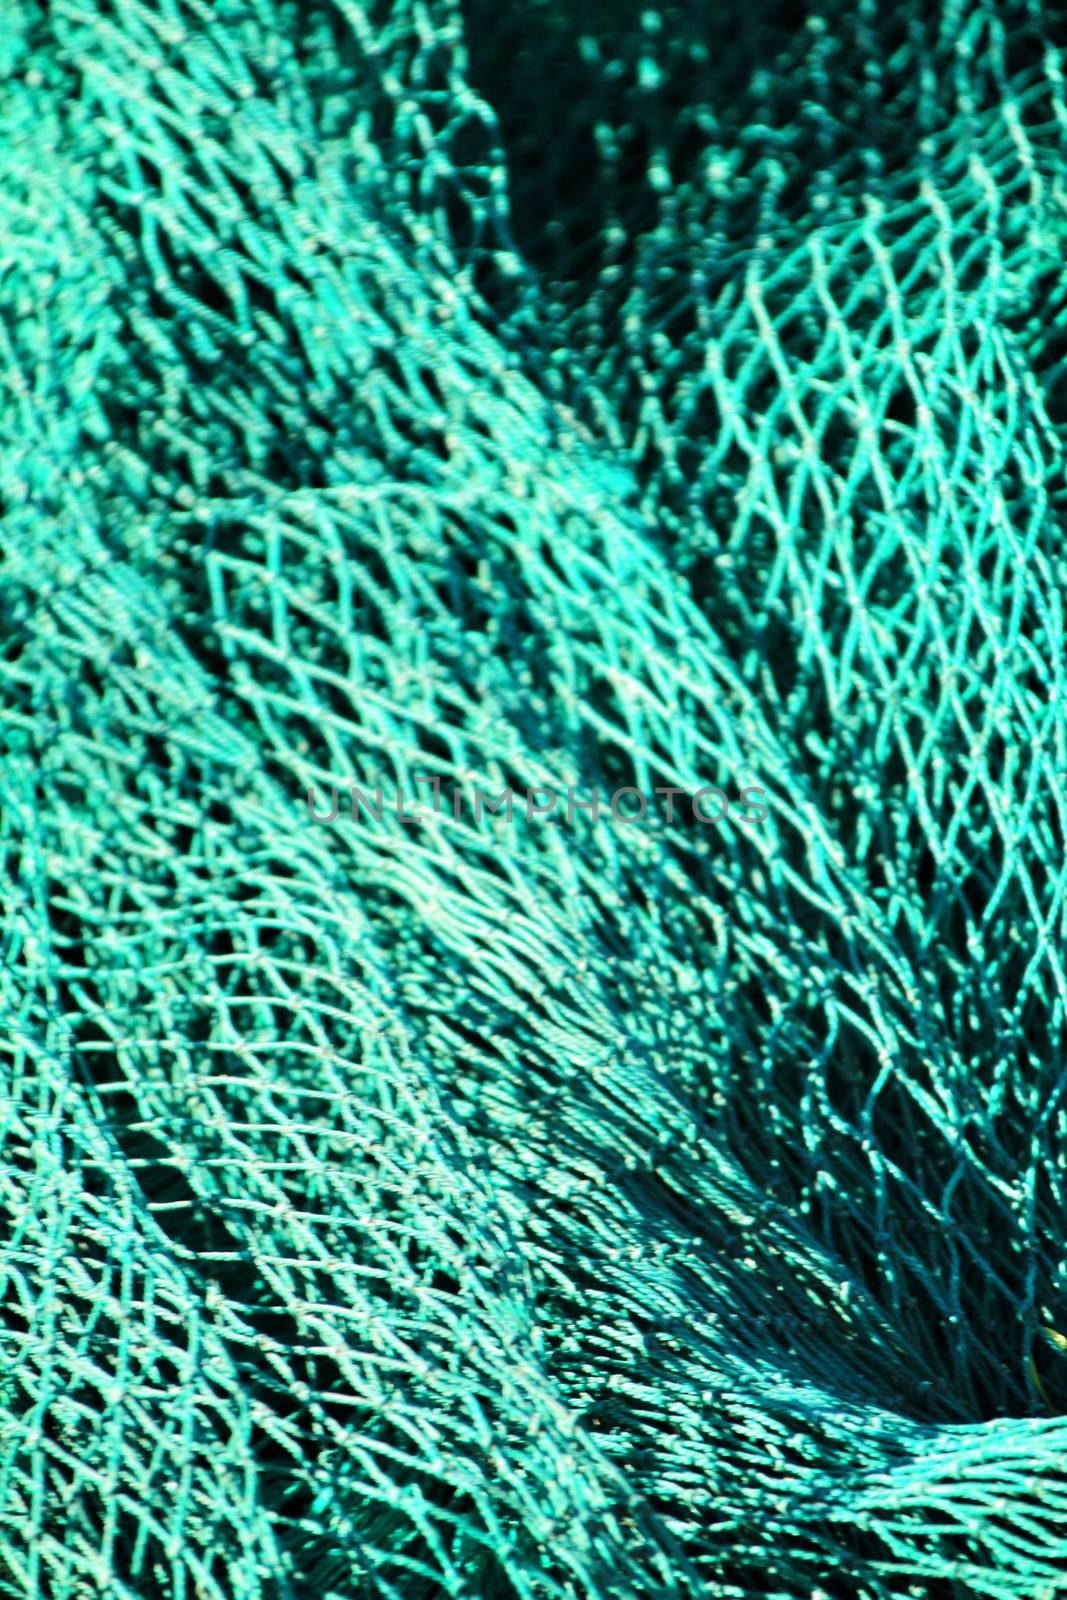 Fishing nets in the dock of Santa Pola, Spain by soniabonet